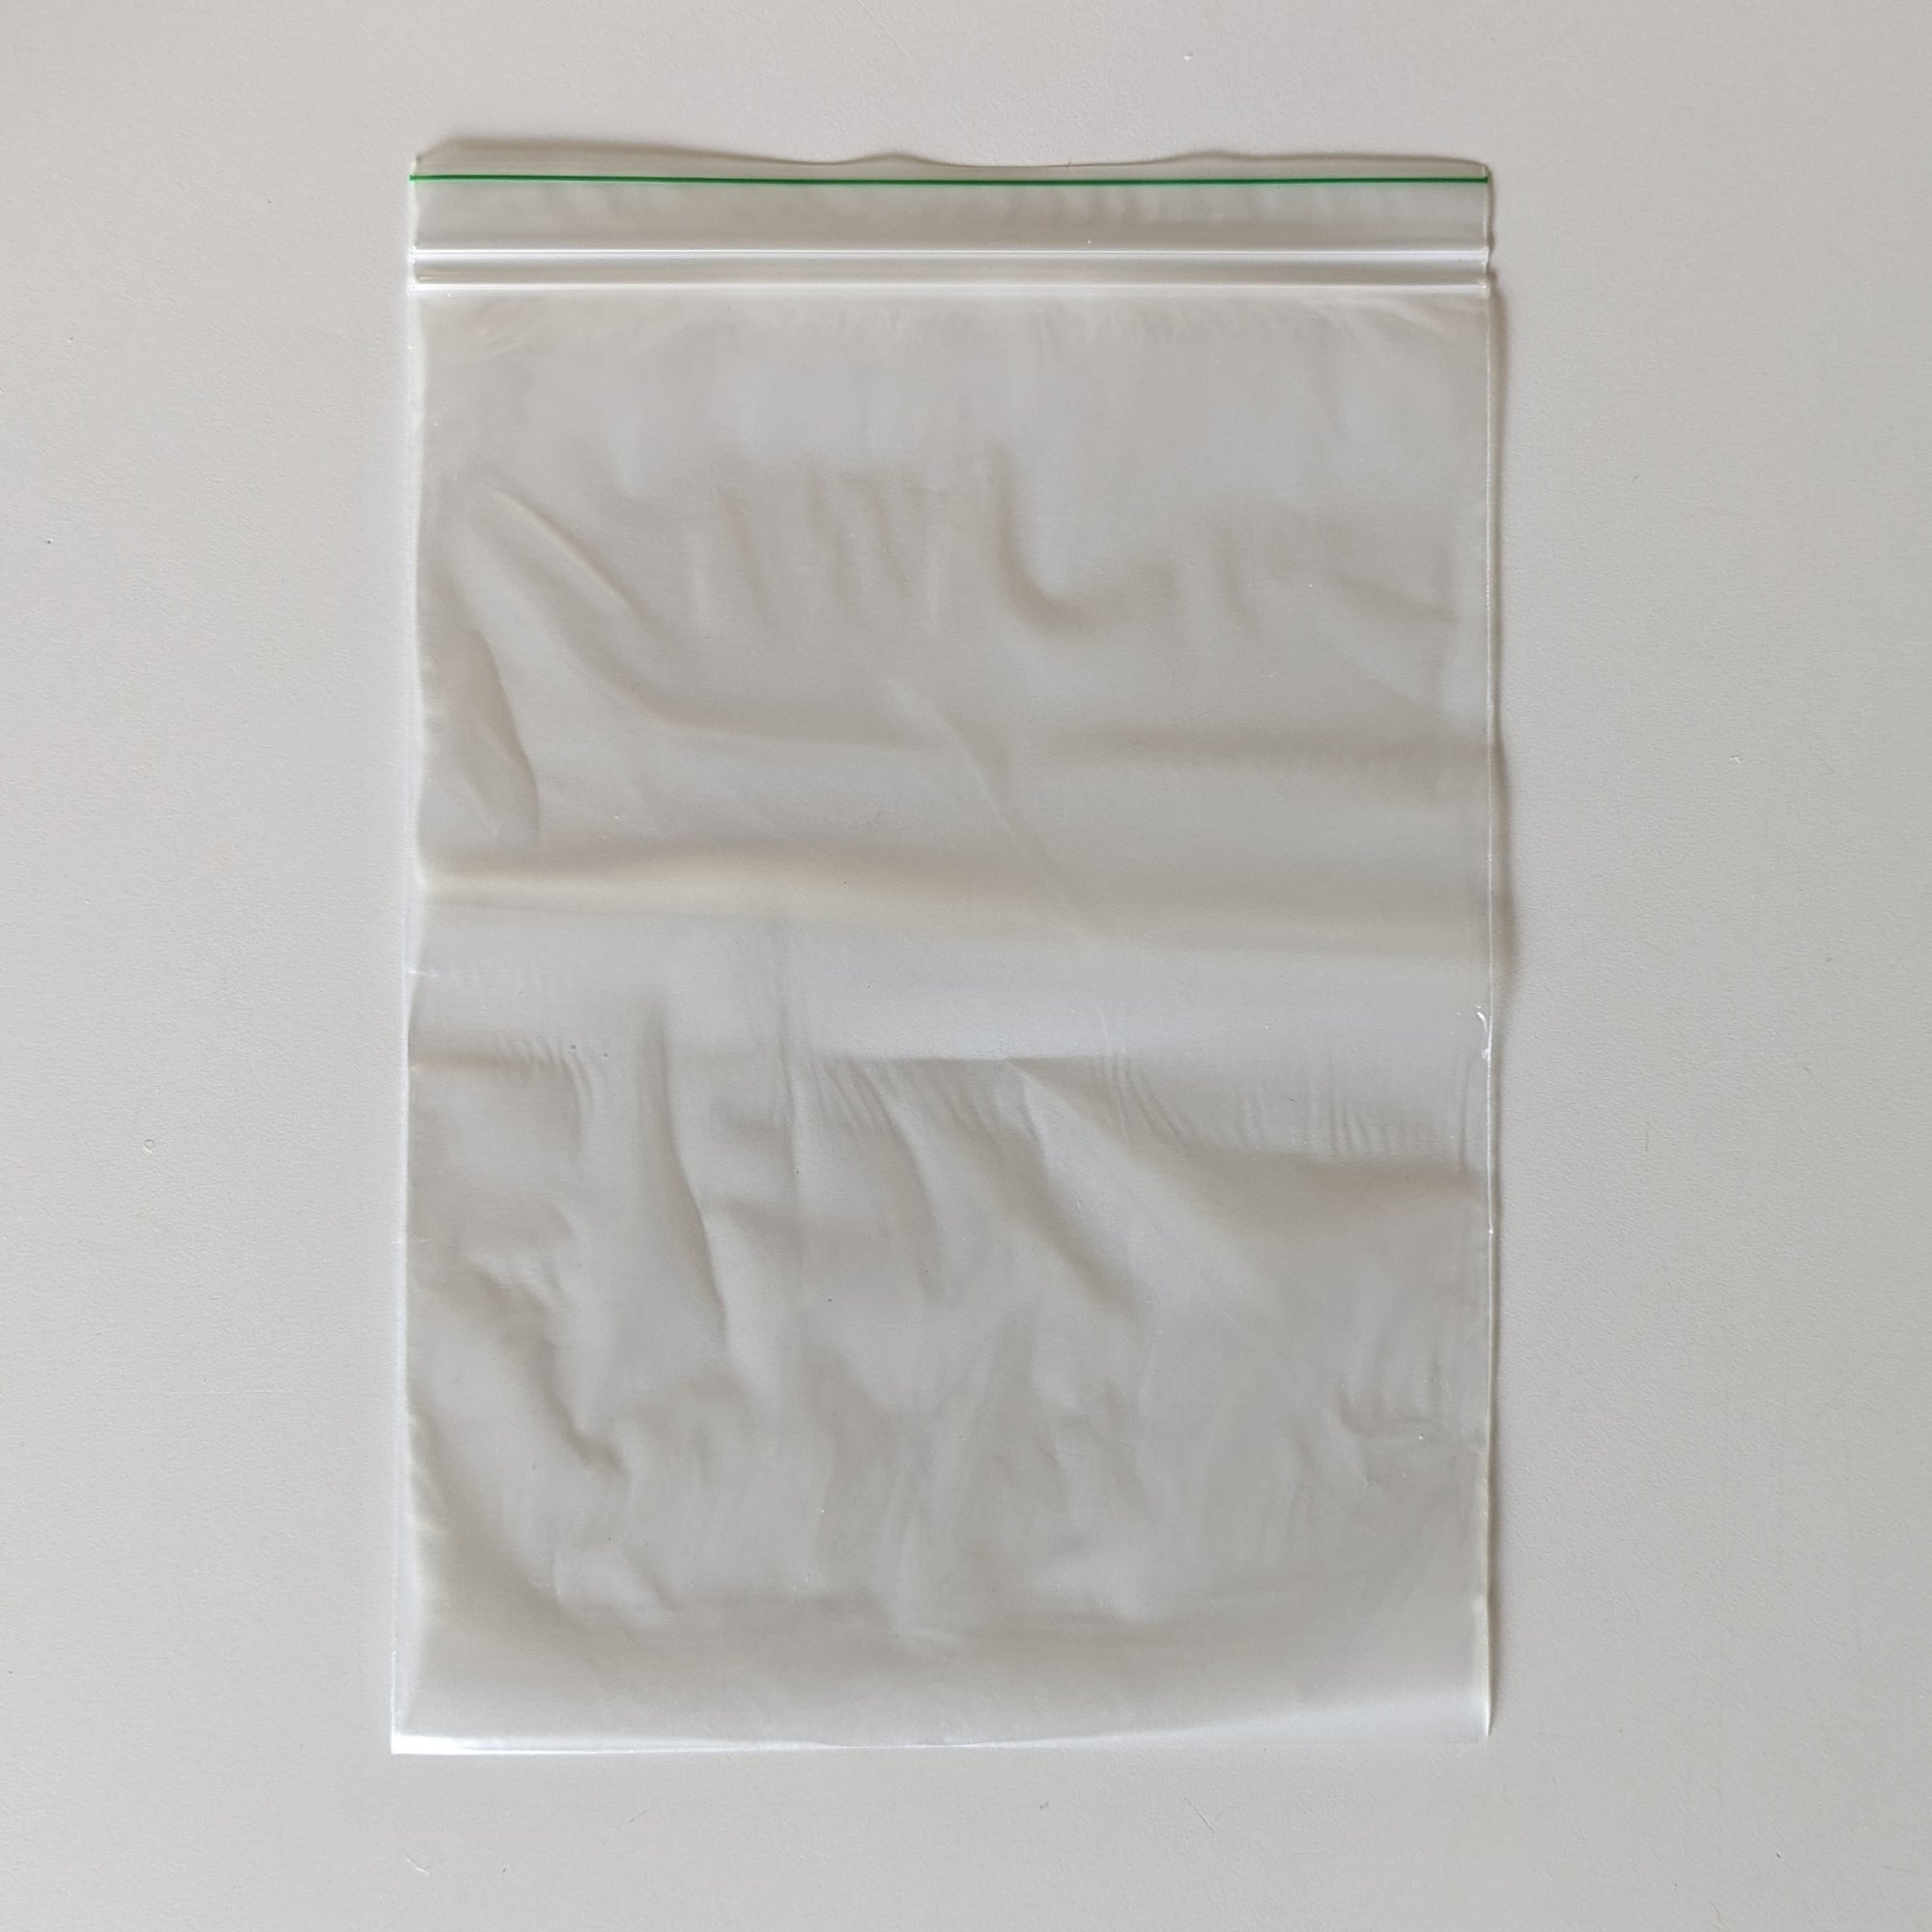 Gallon Size Clear Landfill-Biodegradable Plastic Ziplock Bags 1